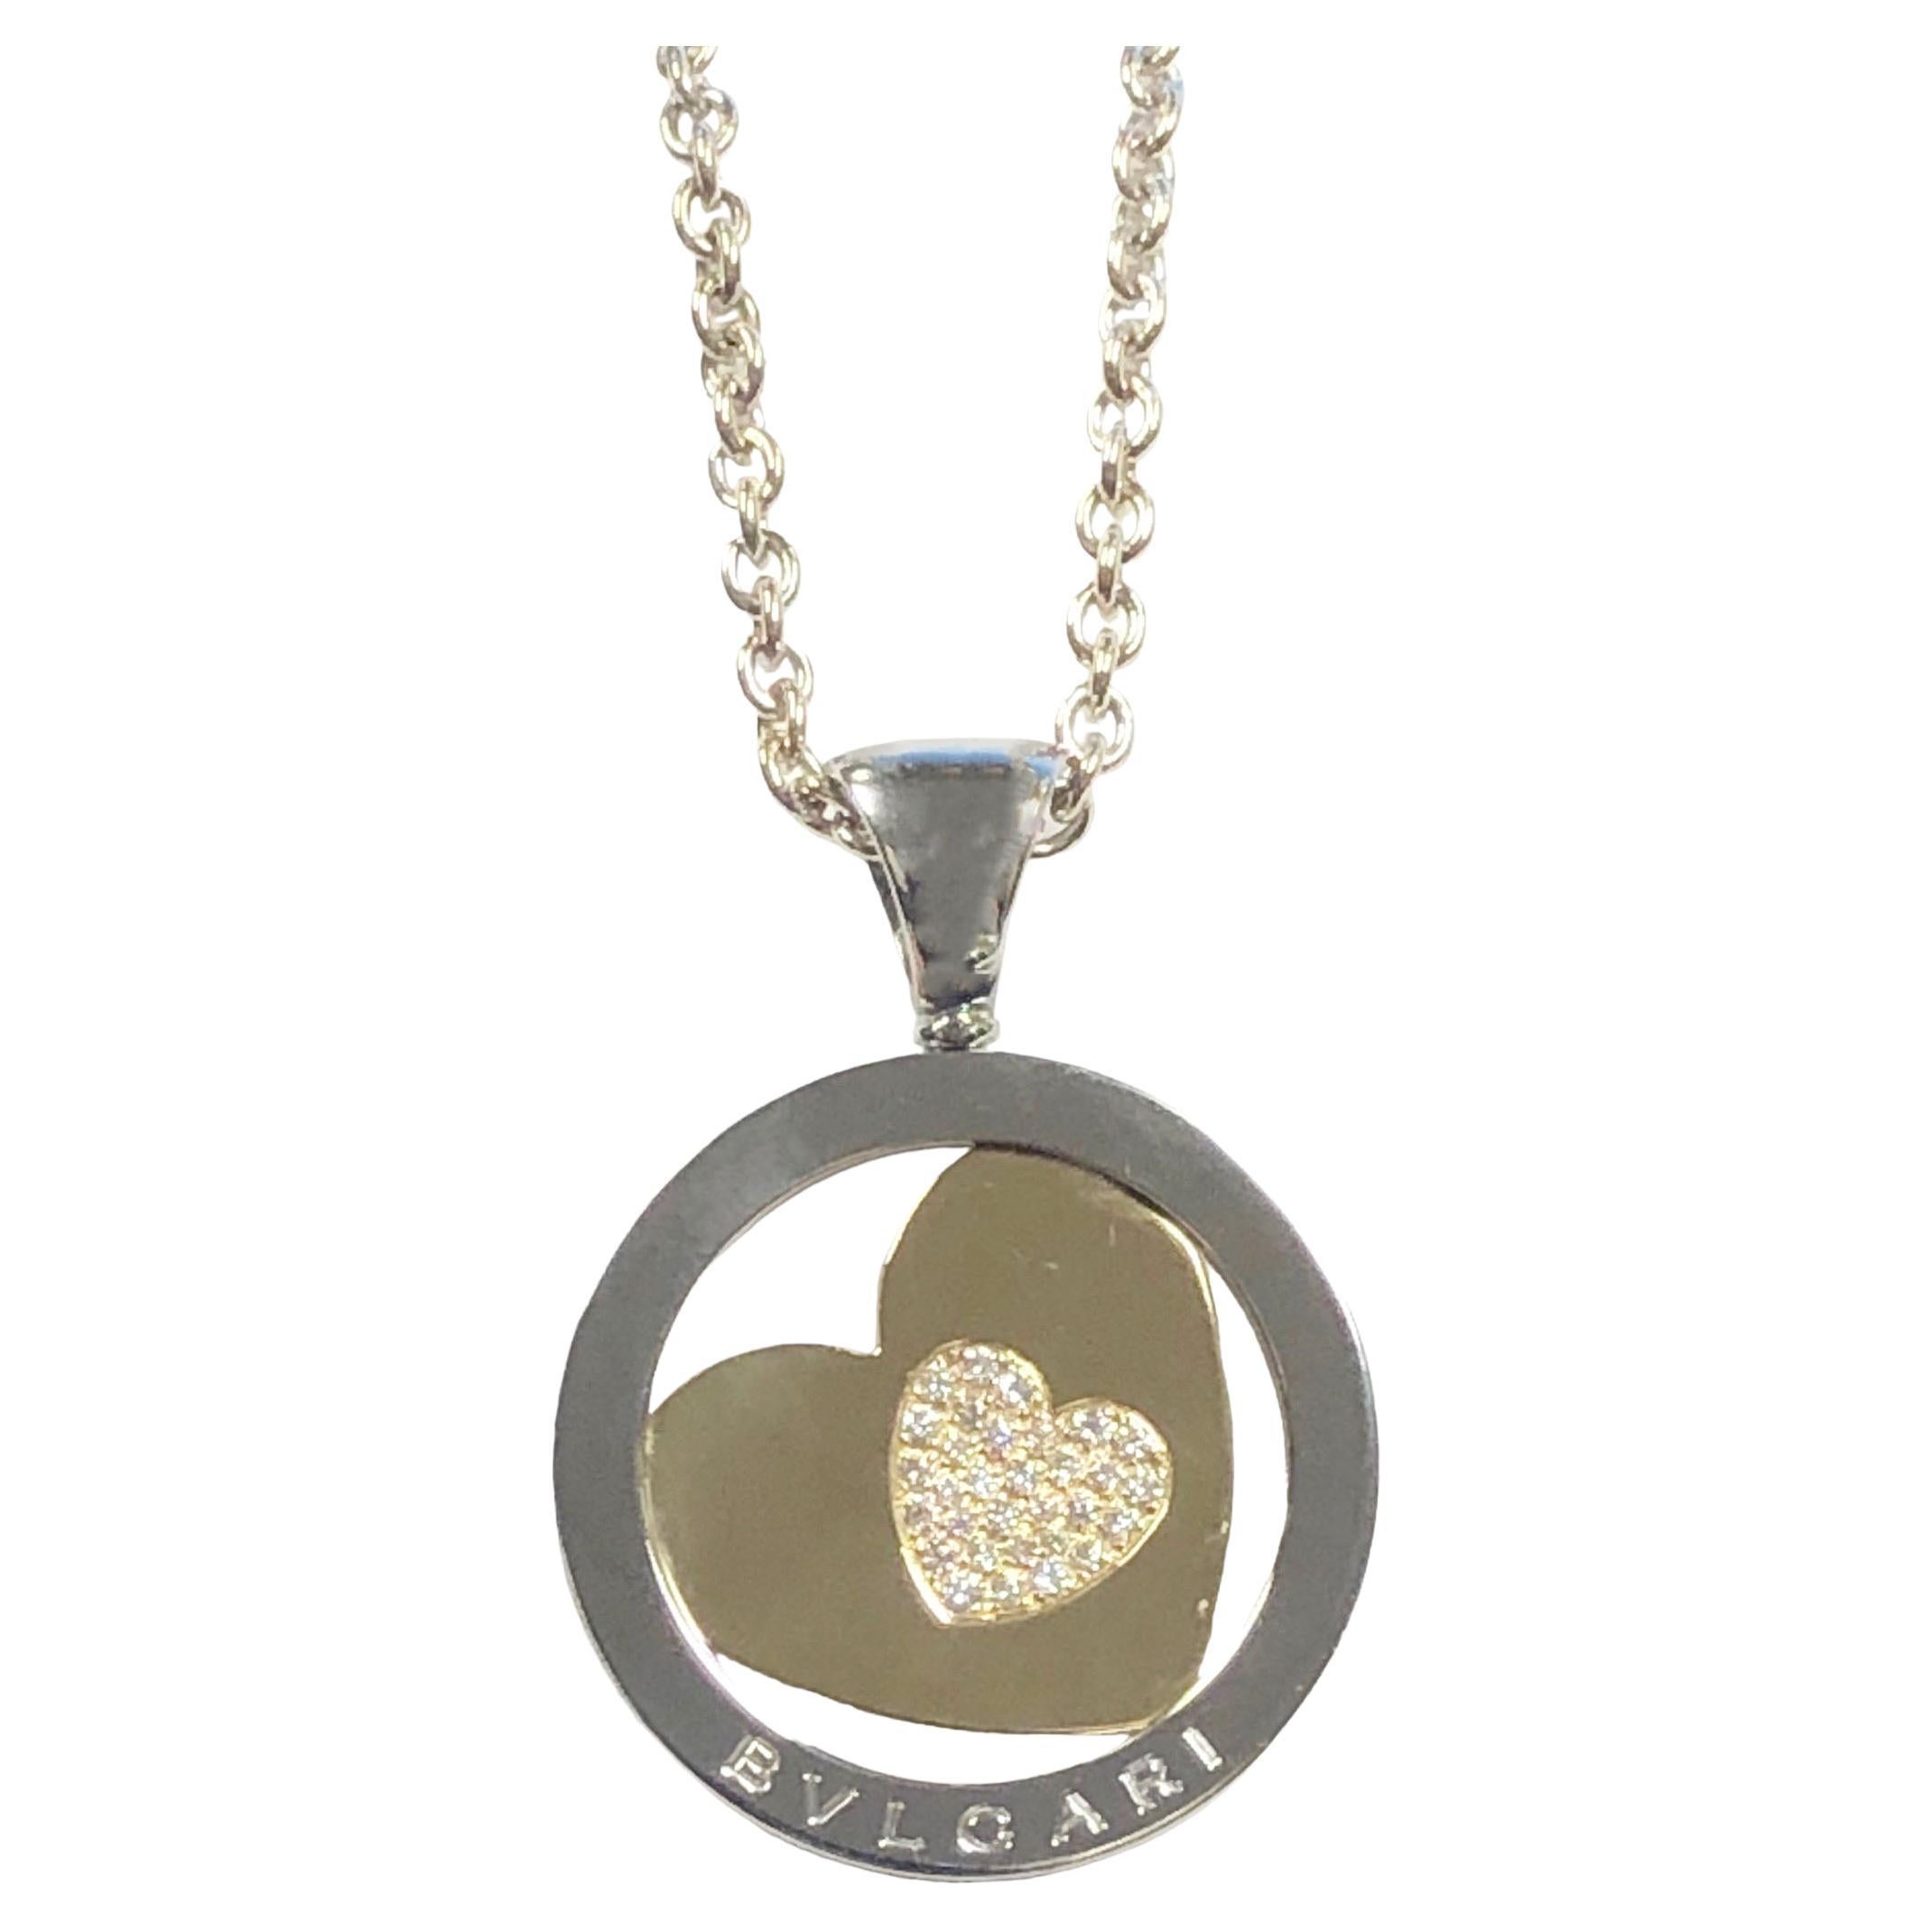 Bulgari - Bulgari High Jewellery necklace in platinum with 19 drop